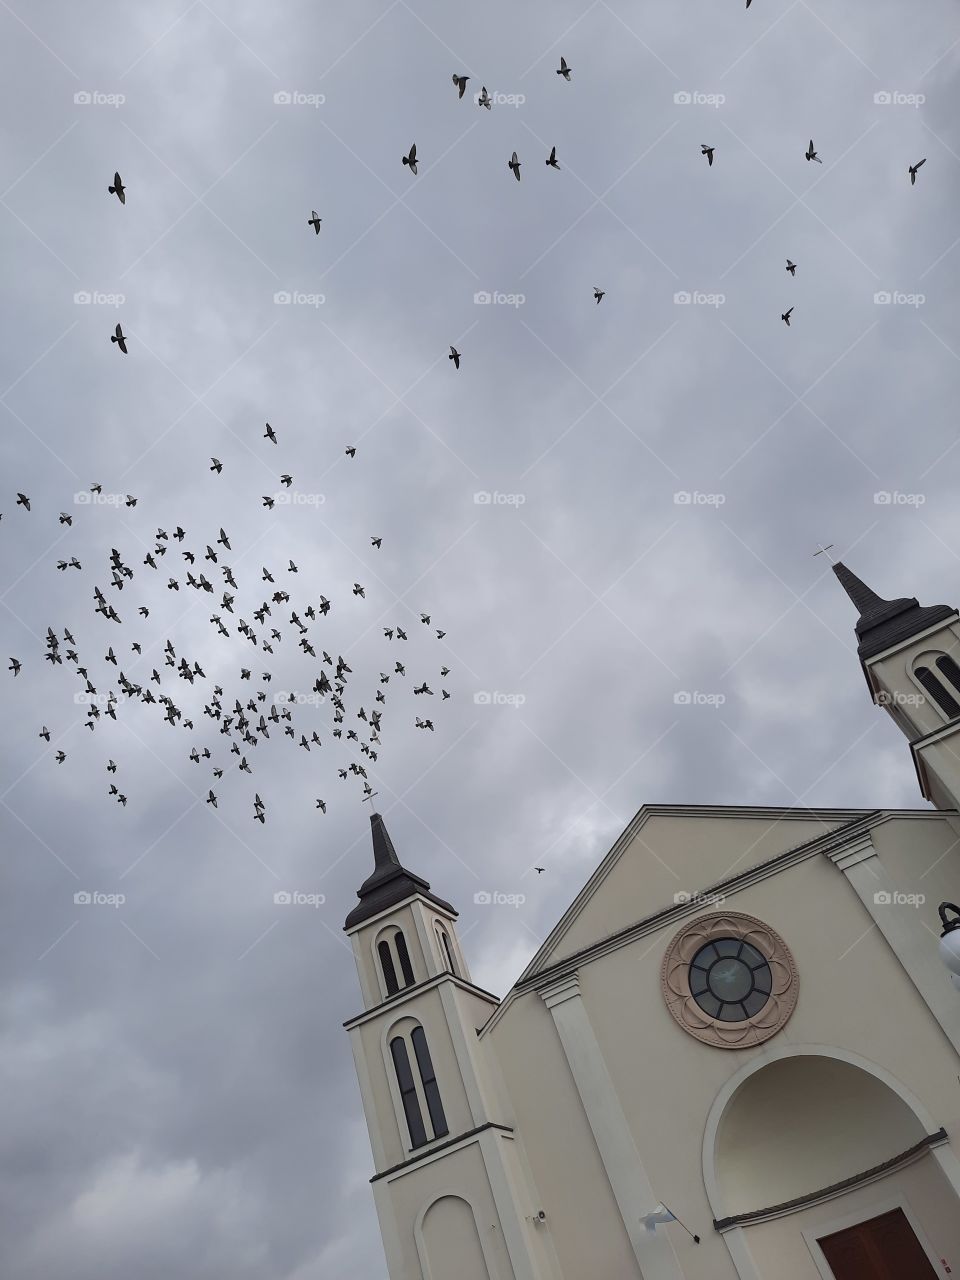 flock of birds above local church